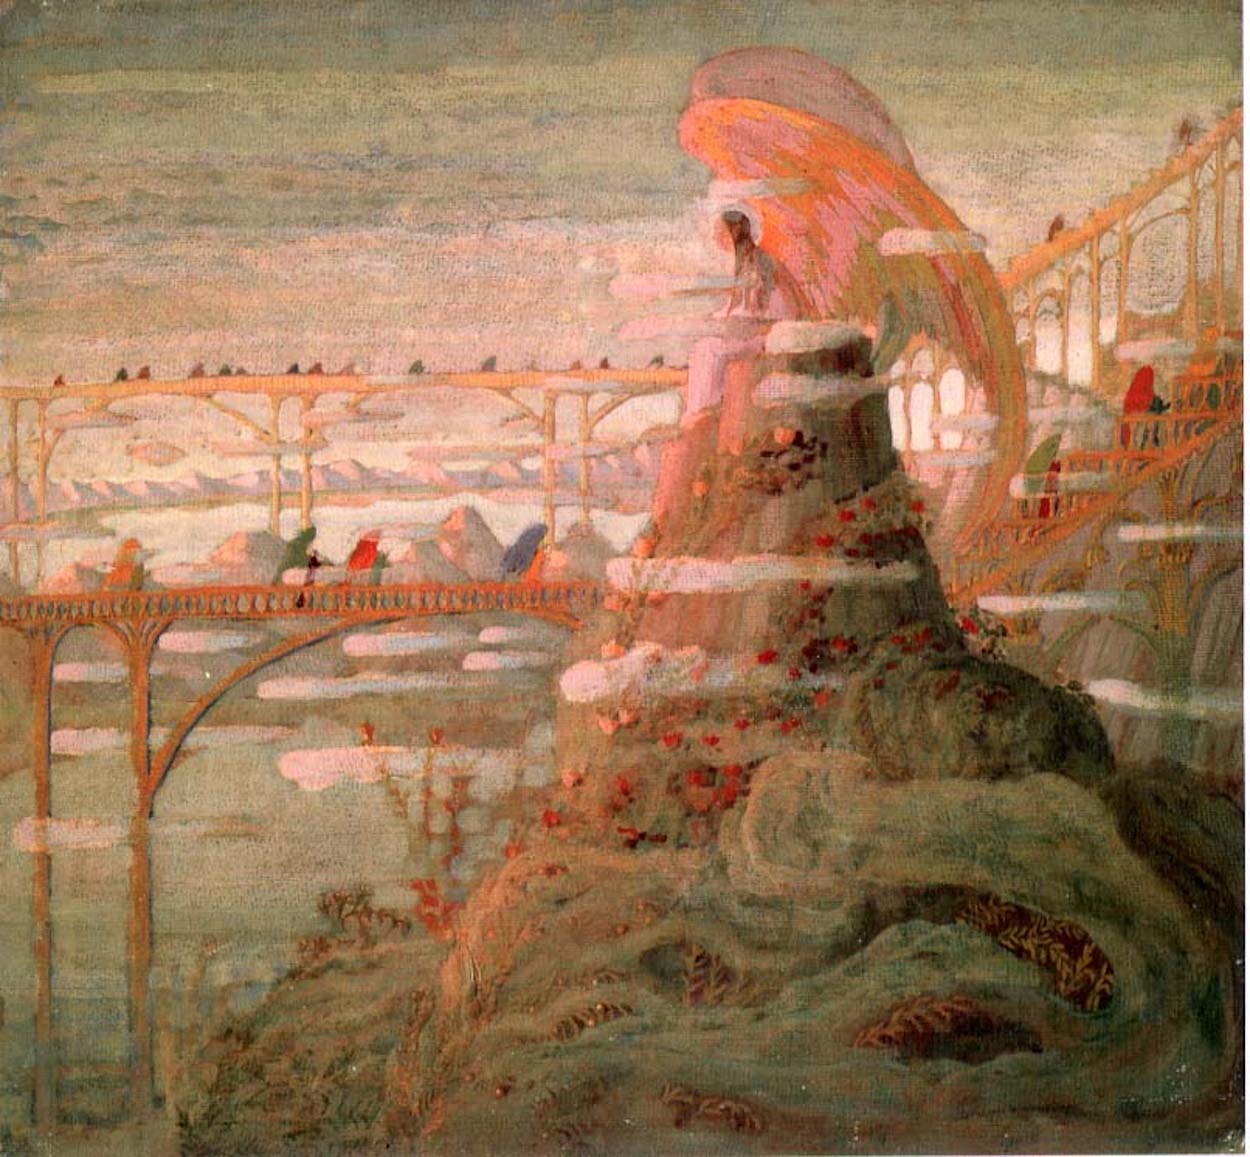 Angelo (Preludio dell'angelo) by Mikalojus Konstantinas Čiurlionis - 1909 - 50 x 53,7 cm 